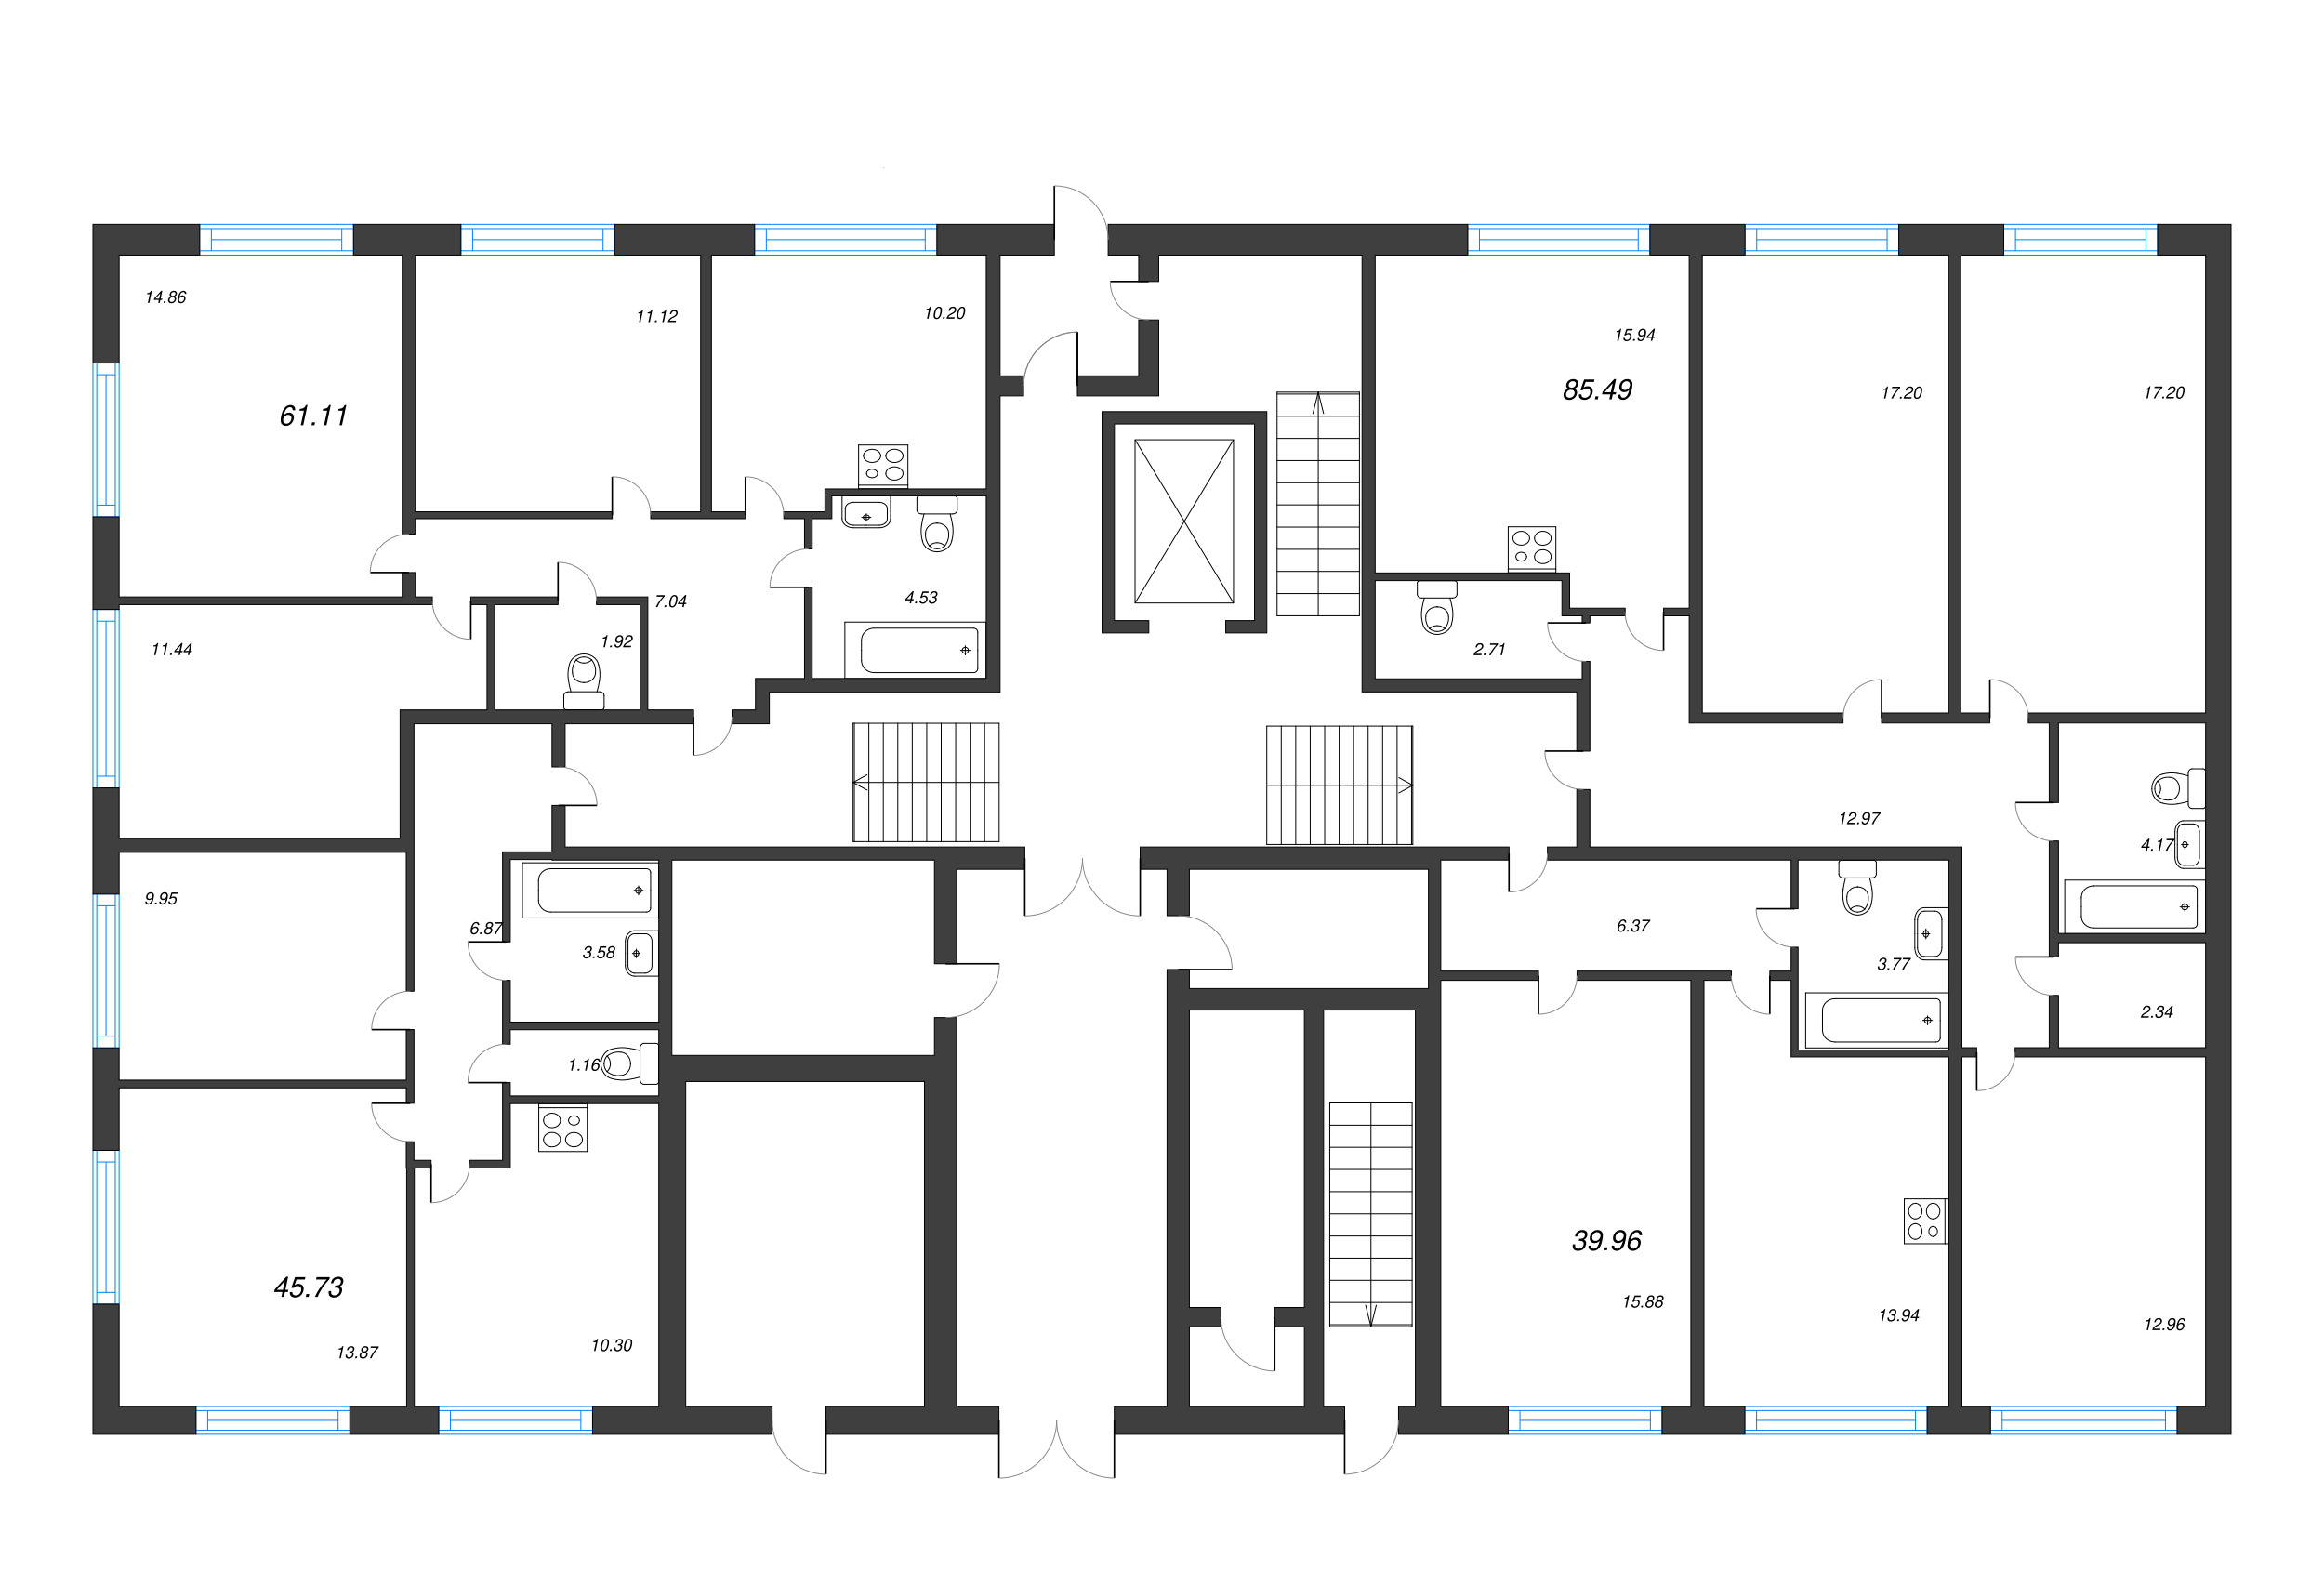 4-комнатная (Евро) квартира, 85.49 м² - планировка этажа